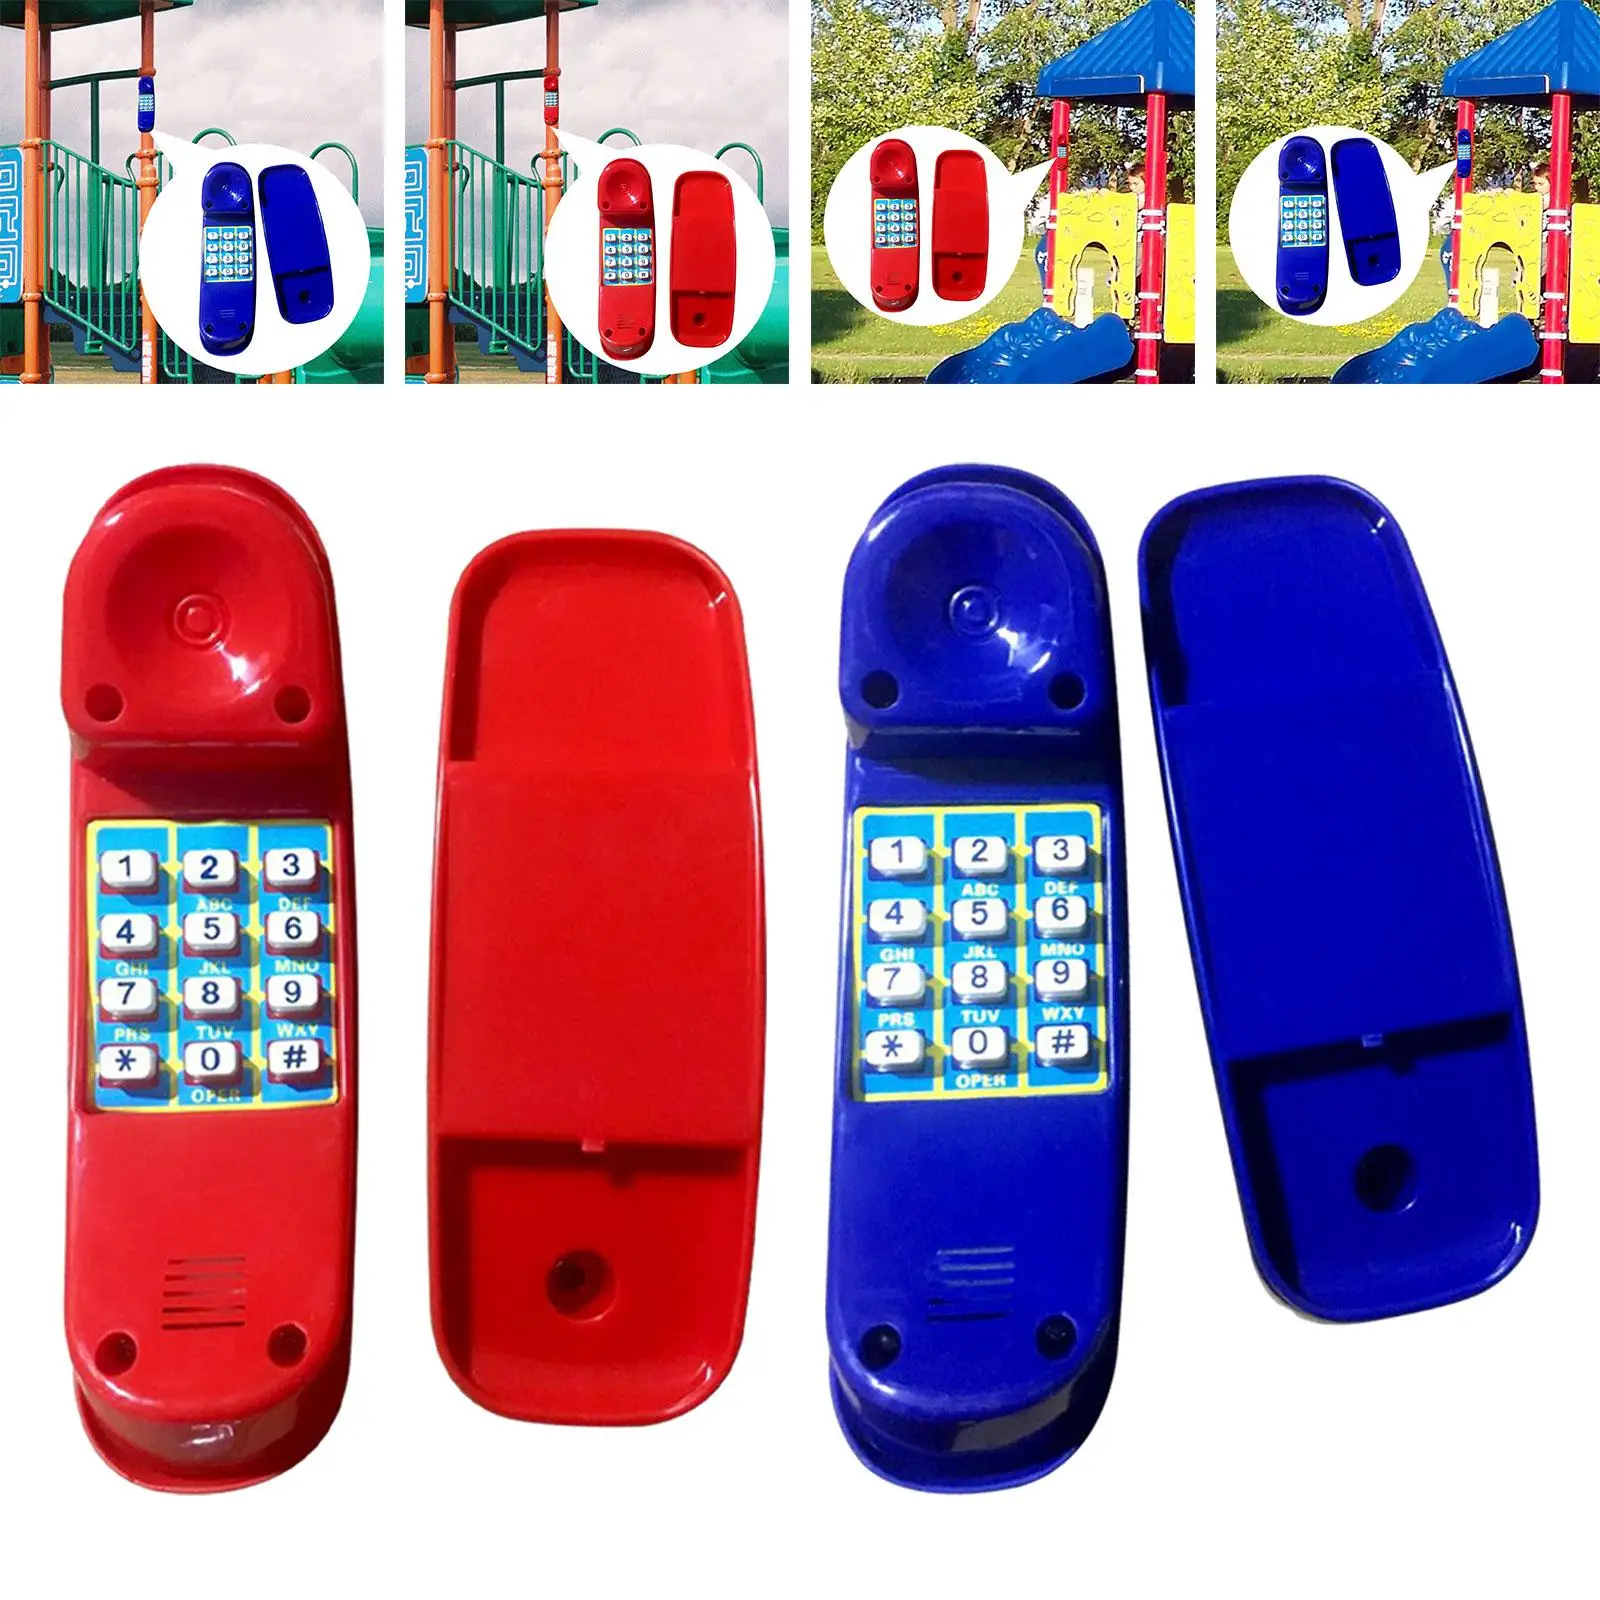 Swing Set Phone Toys Treehouse Creative Pretend Numeric Key Telephone Outdoor